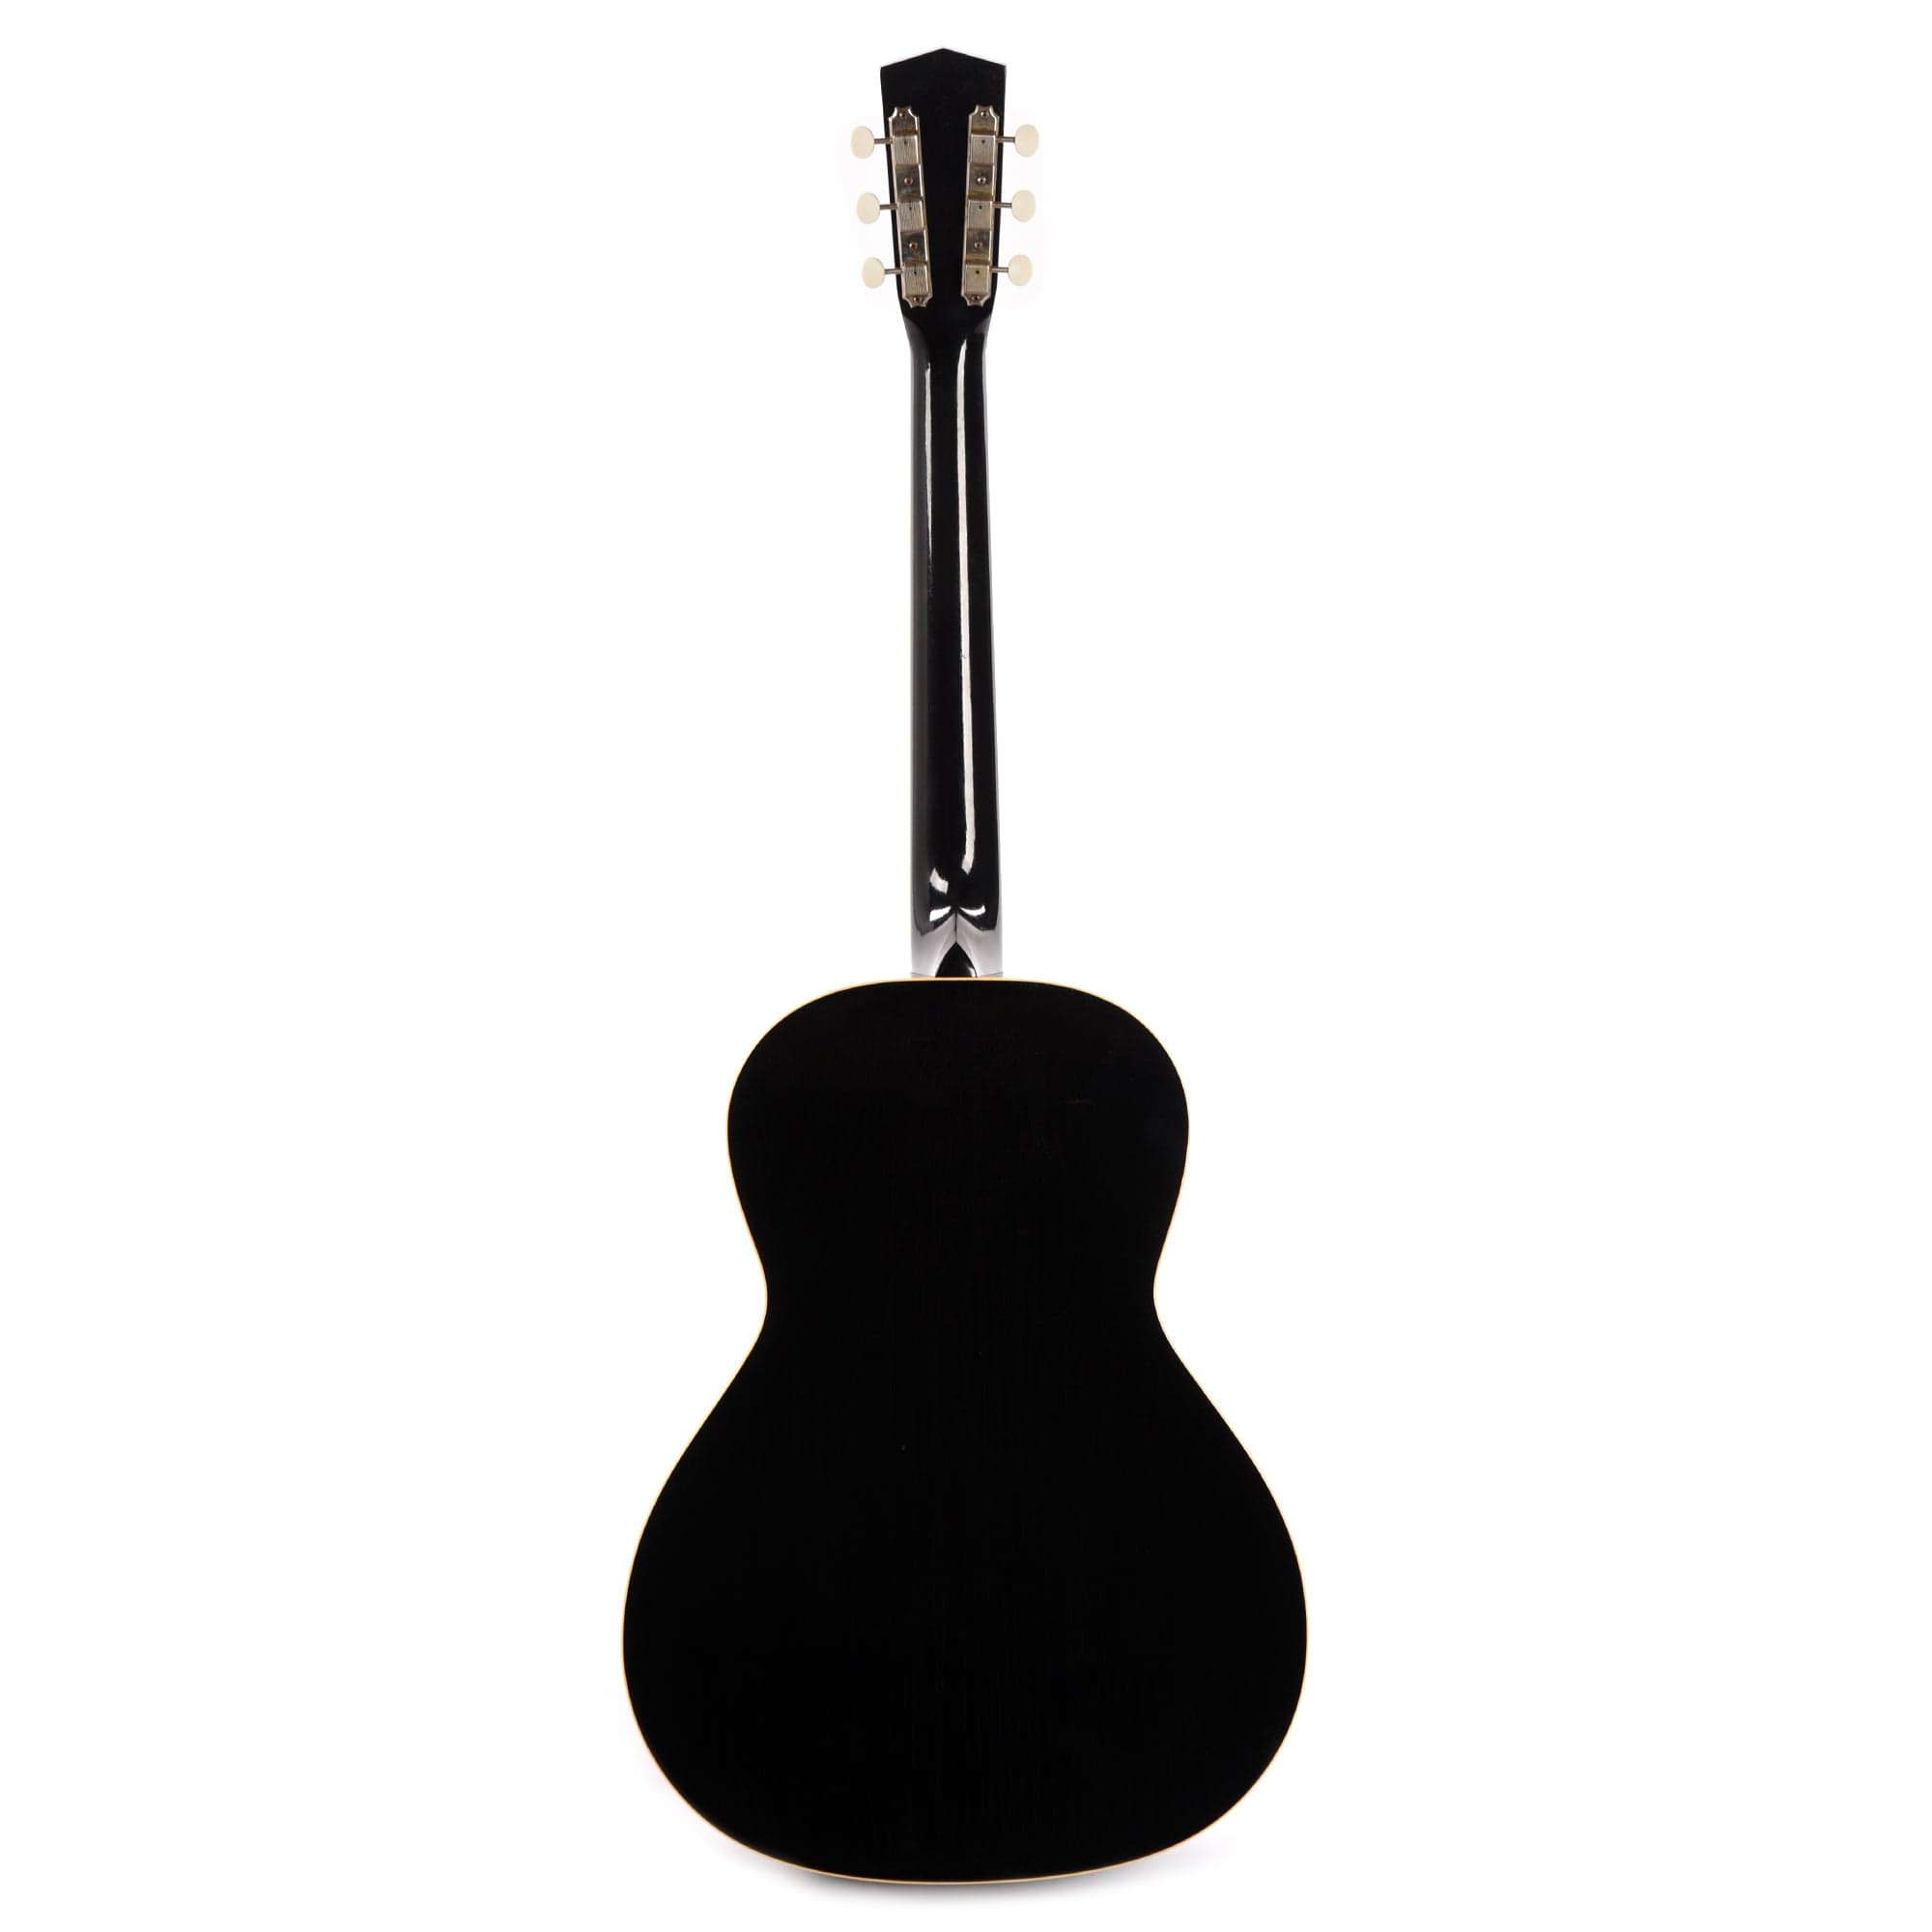 Atkin The Thirty Six Custom Sitka/Mahogany Aged Black Acoustic Guitars / Parlor